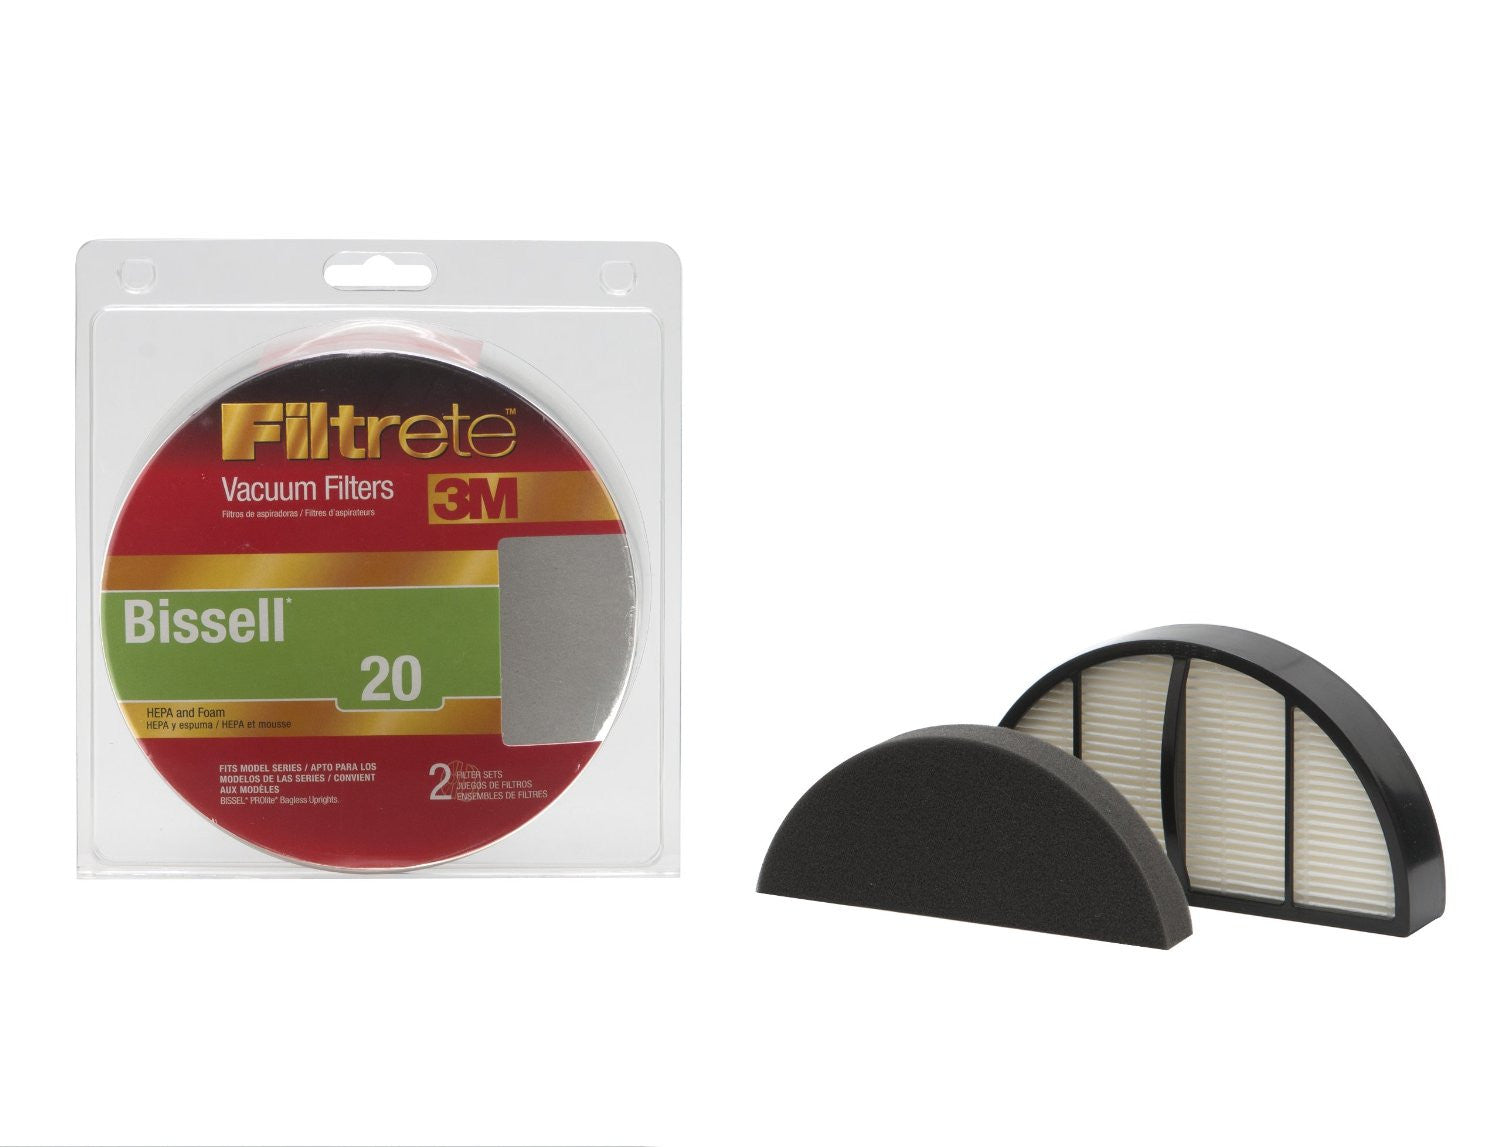 3M Filtrete Bissell 20 (PROlite) Vacuum Filter, 1 Pack